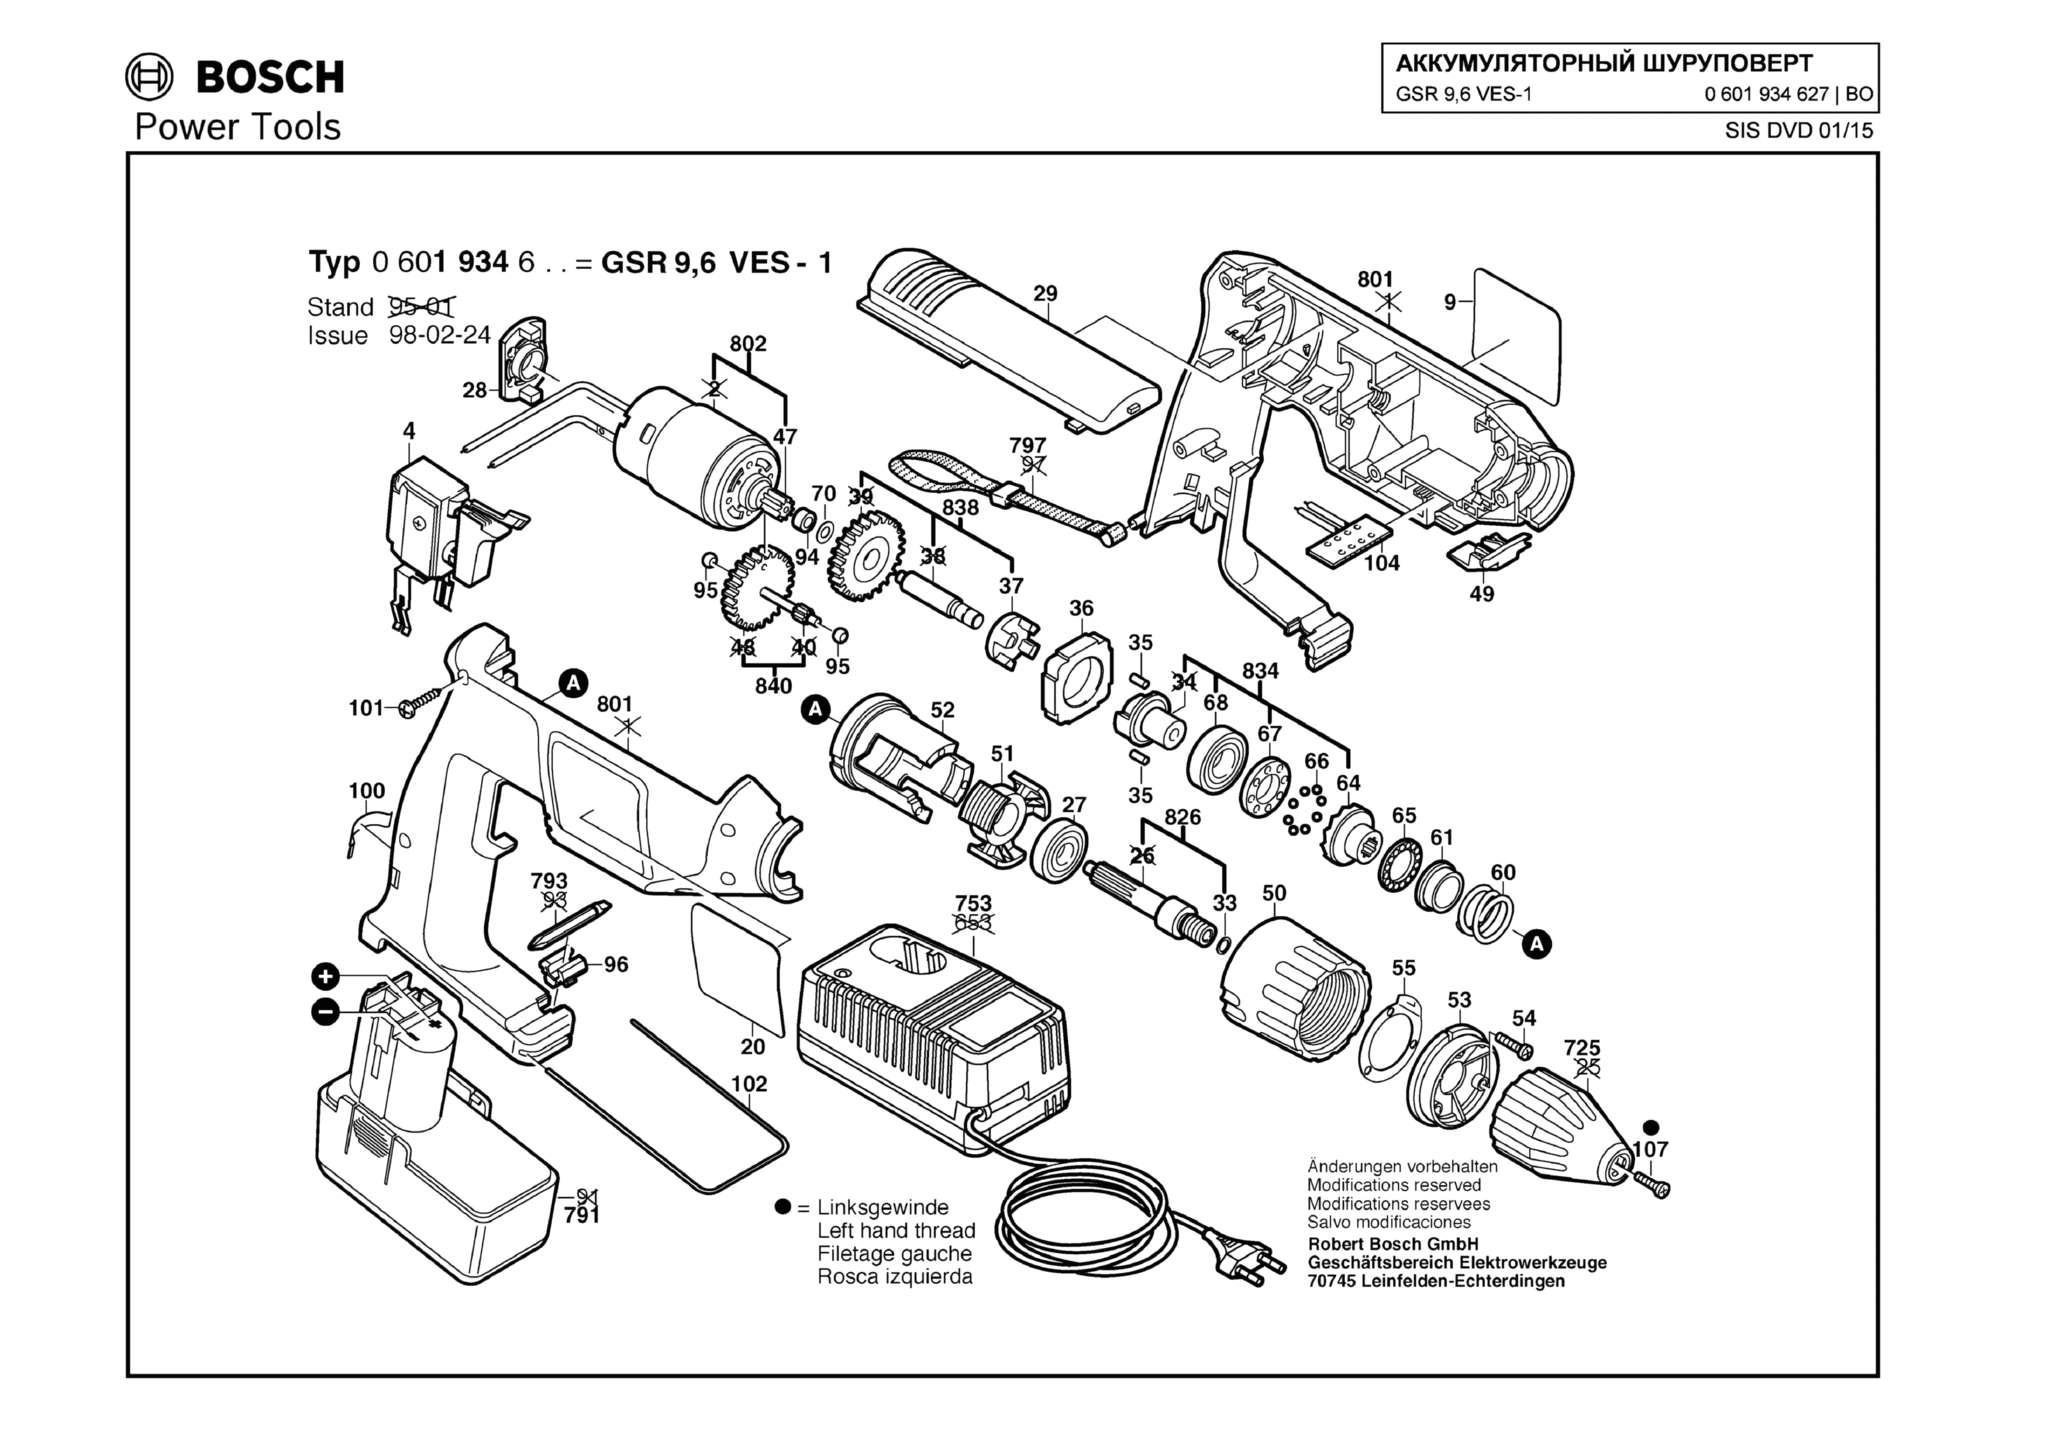 Запчасти, схема и деталировка Bosch GSR 9,6 VES-1 (ТИП 0601934627)